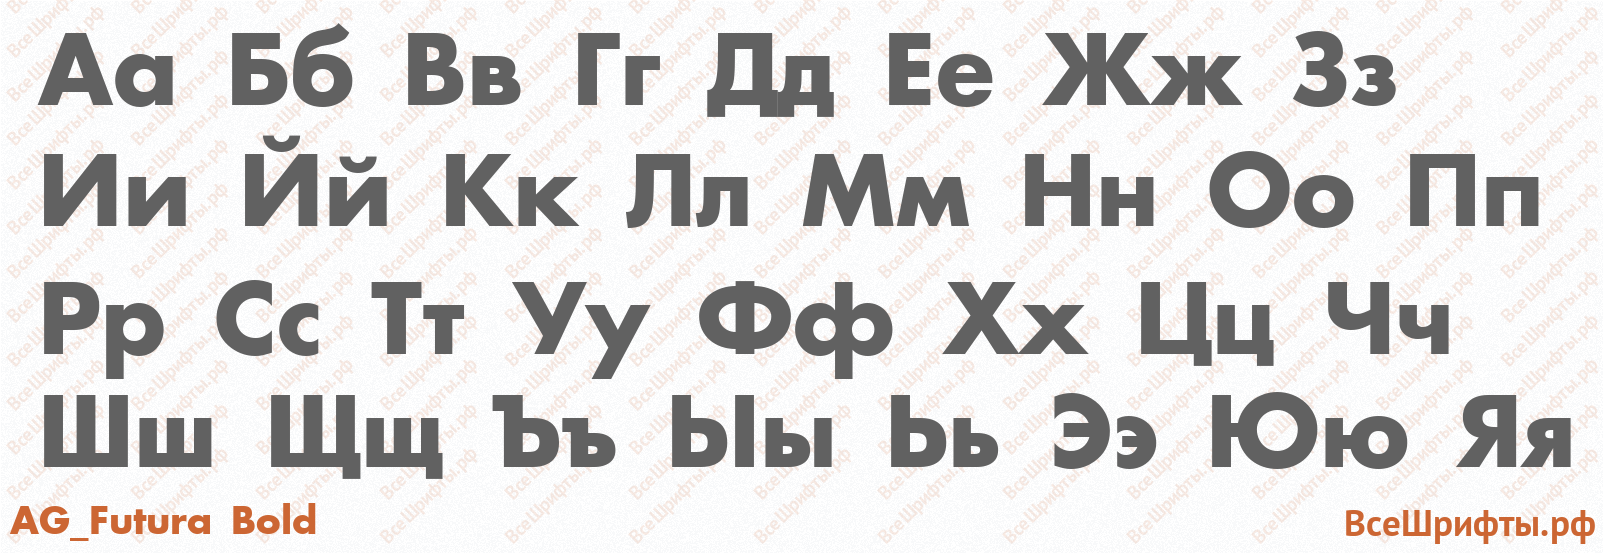 Шрифт AG_Futura Bold с русскими буквами